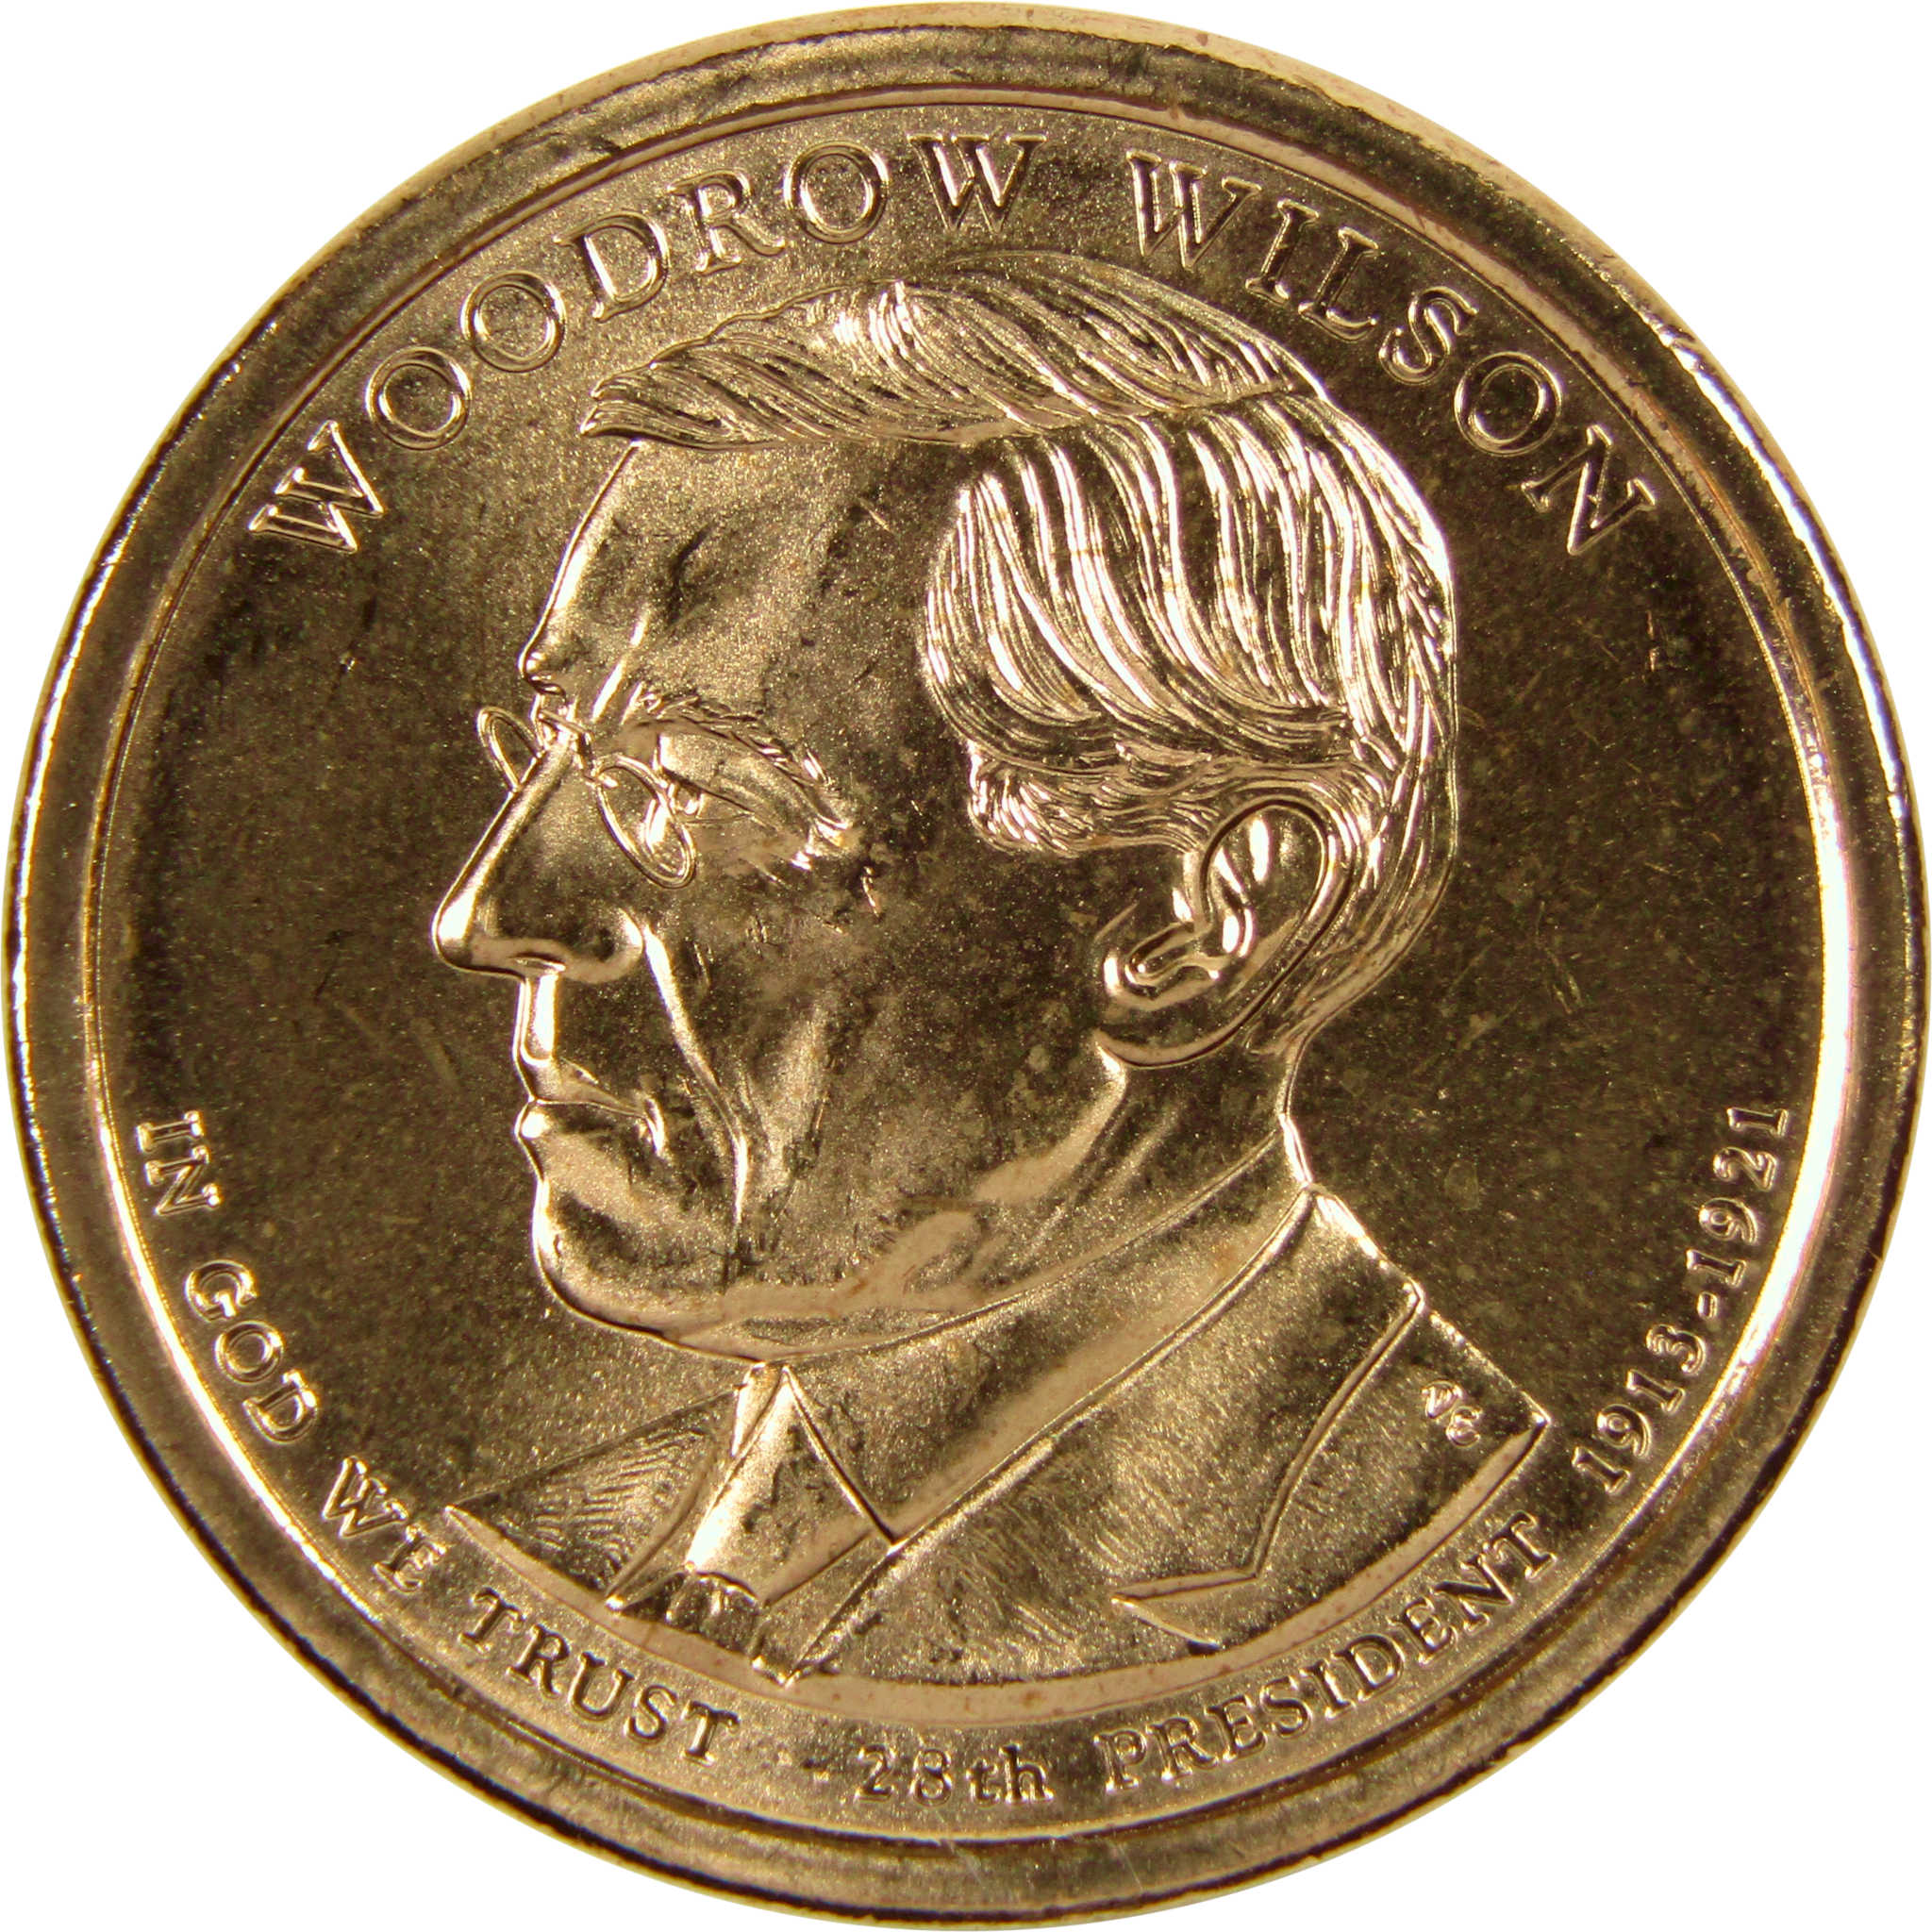 2013 D Woodrow Wilson Presidential Dollar BU Uncirculated $1 Coin